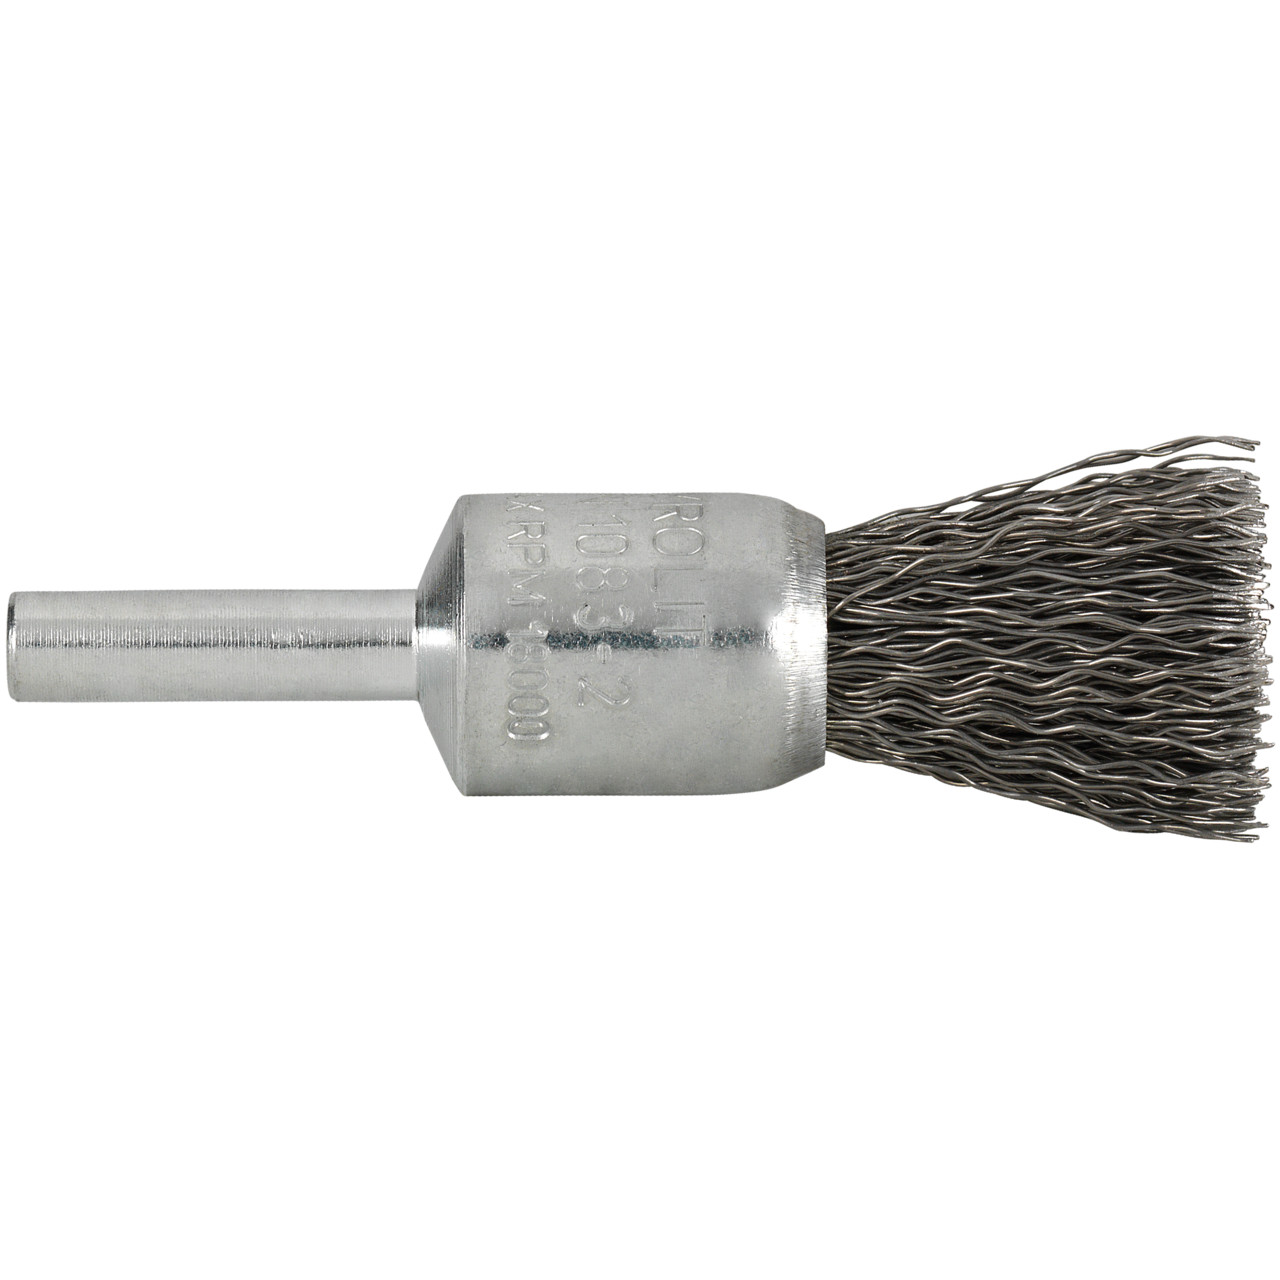 Tyrolit Brush brushes DxH-GExI 12x20-6x60 For steel, shape: 52PDW - (brush brushes), Art. 903432